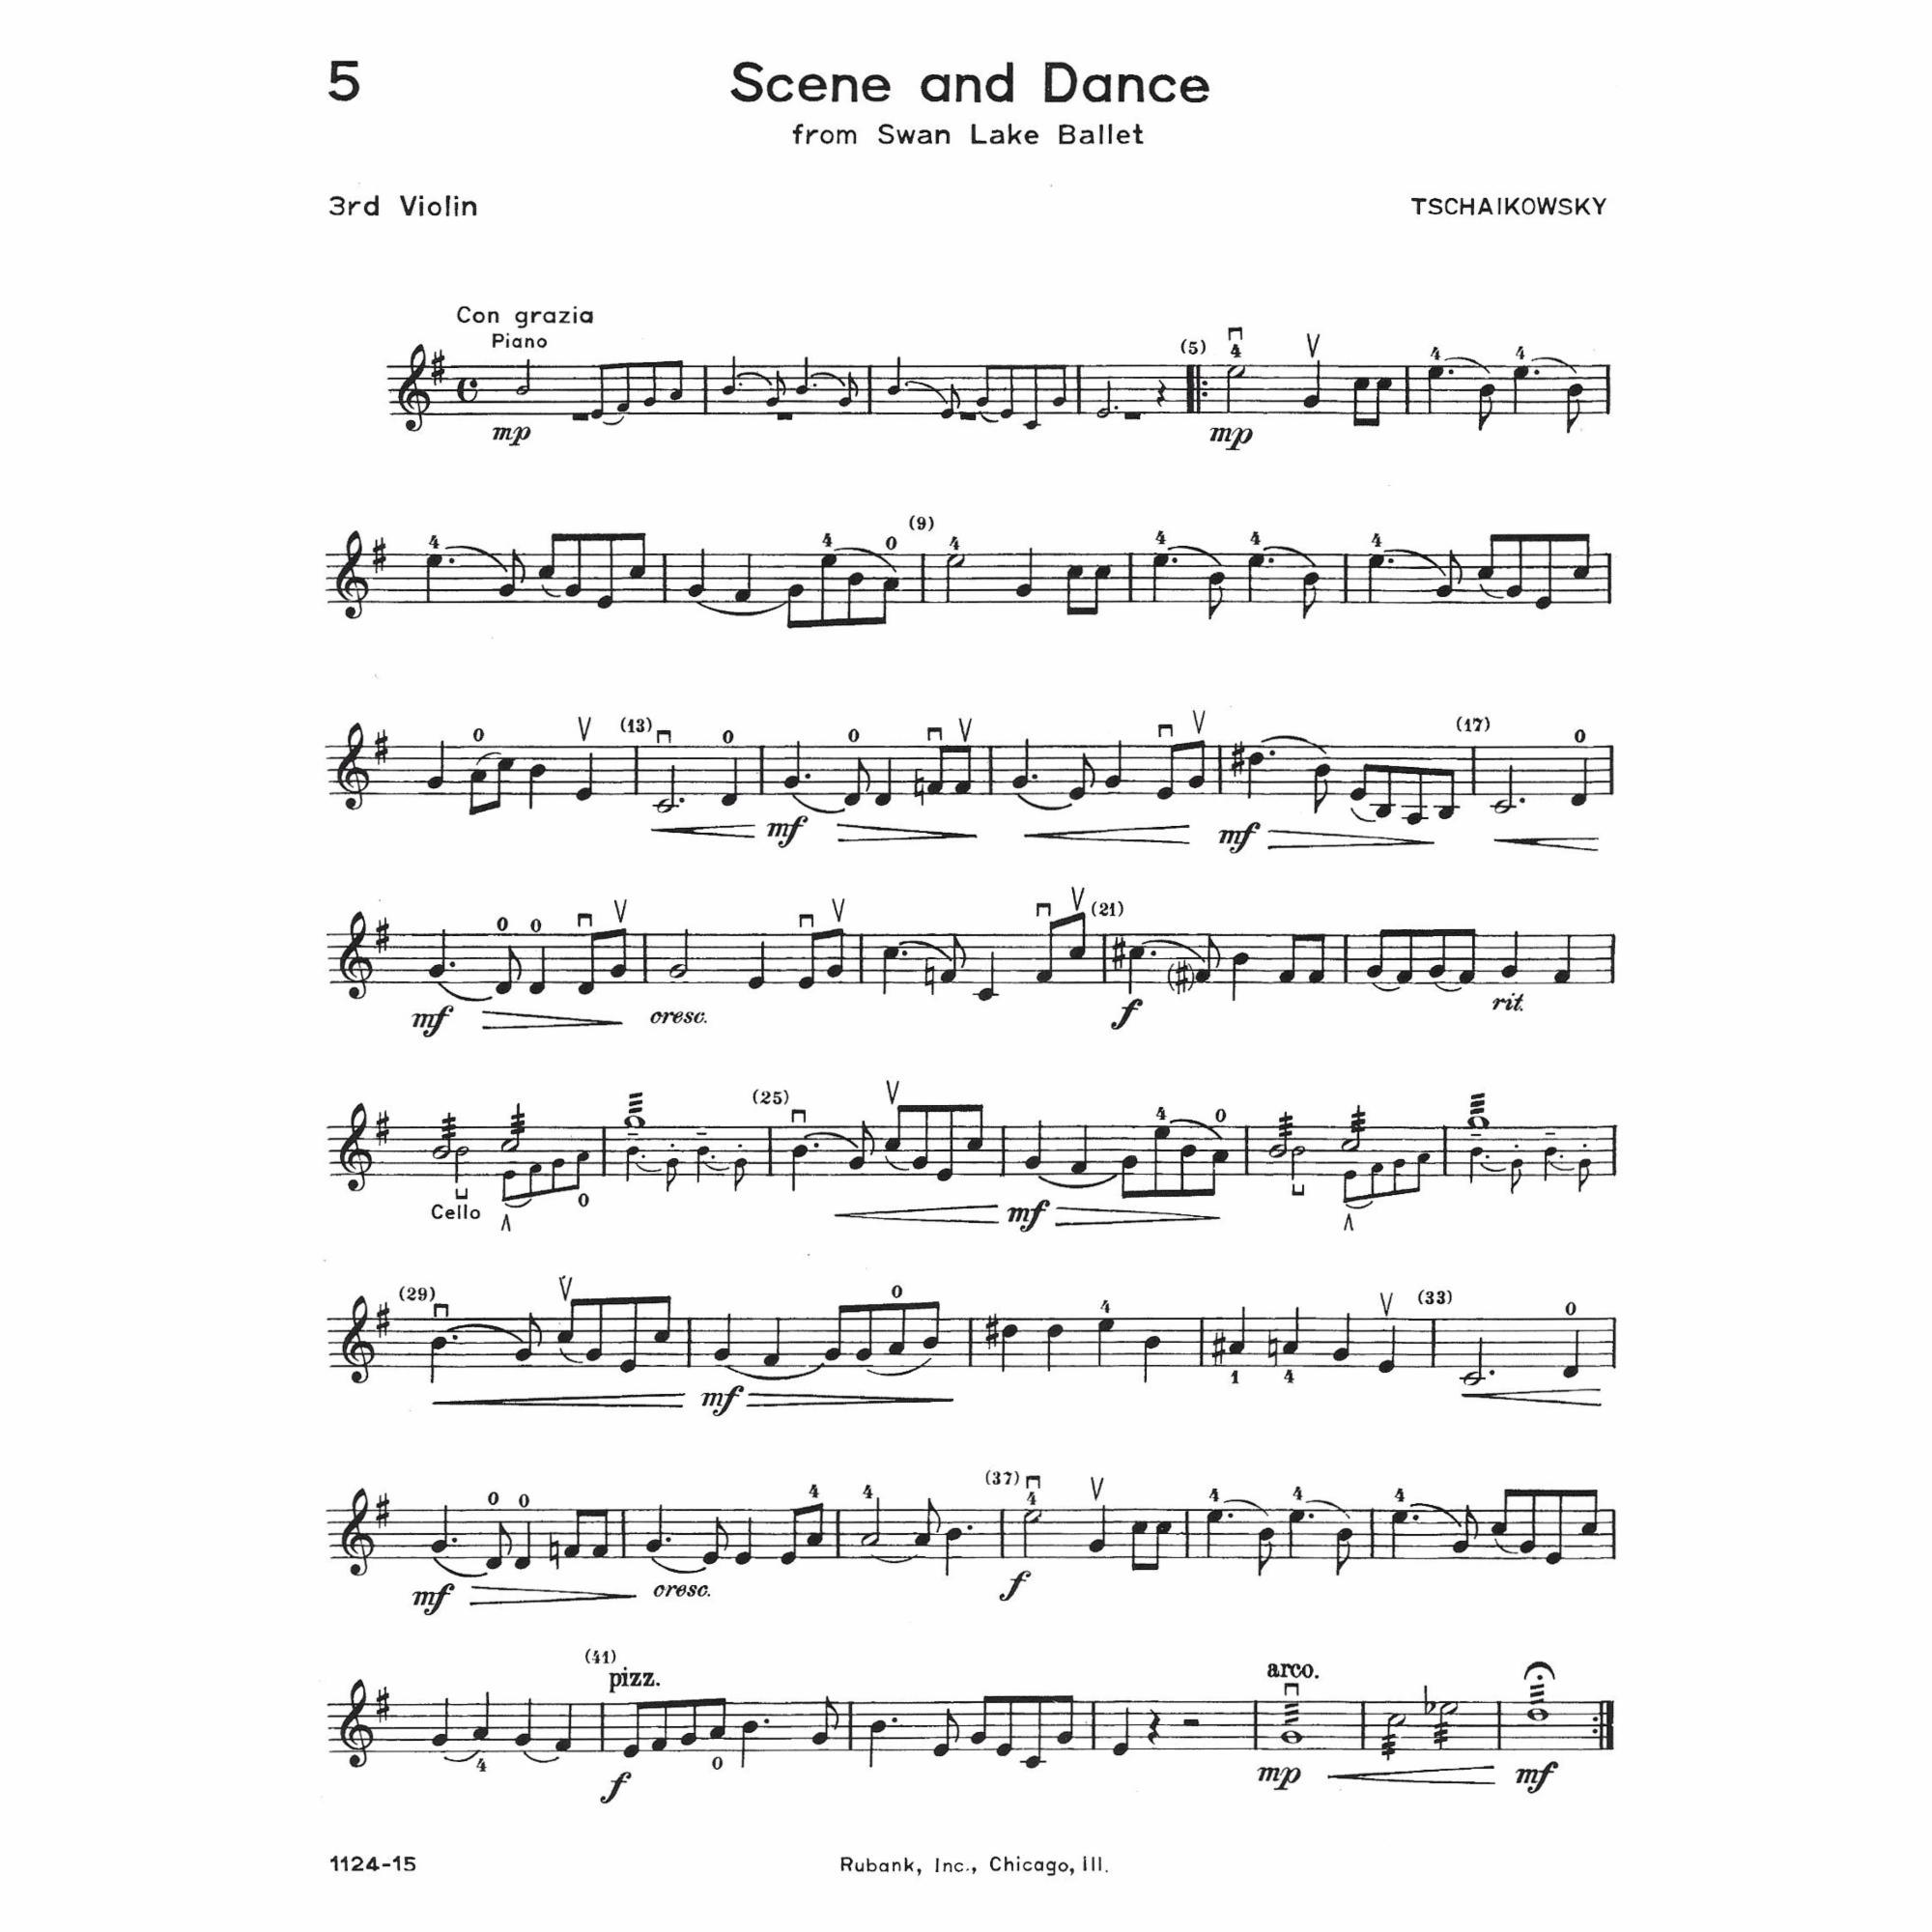 Sample: Third Violin (Pg. 5)